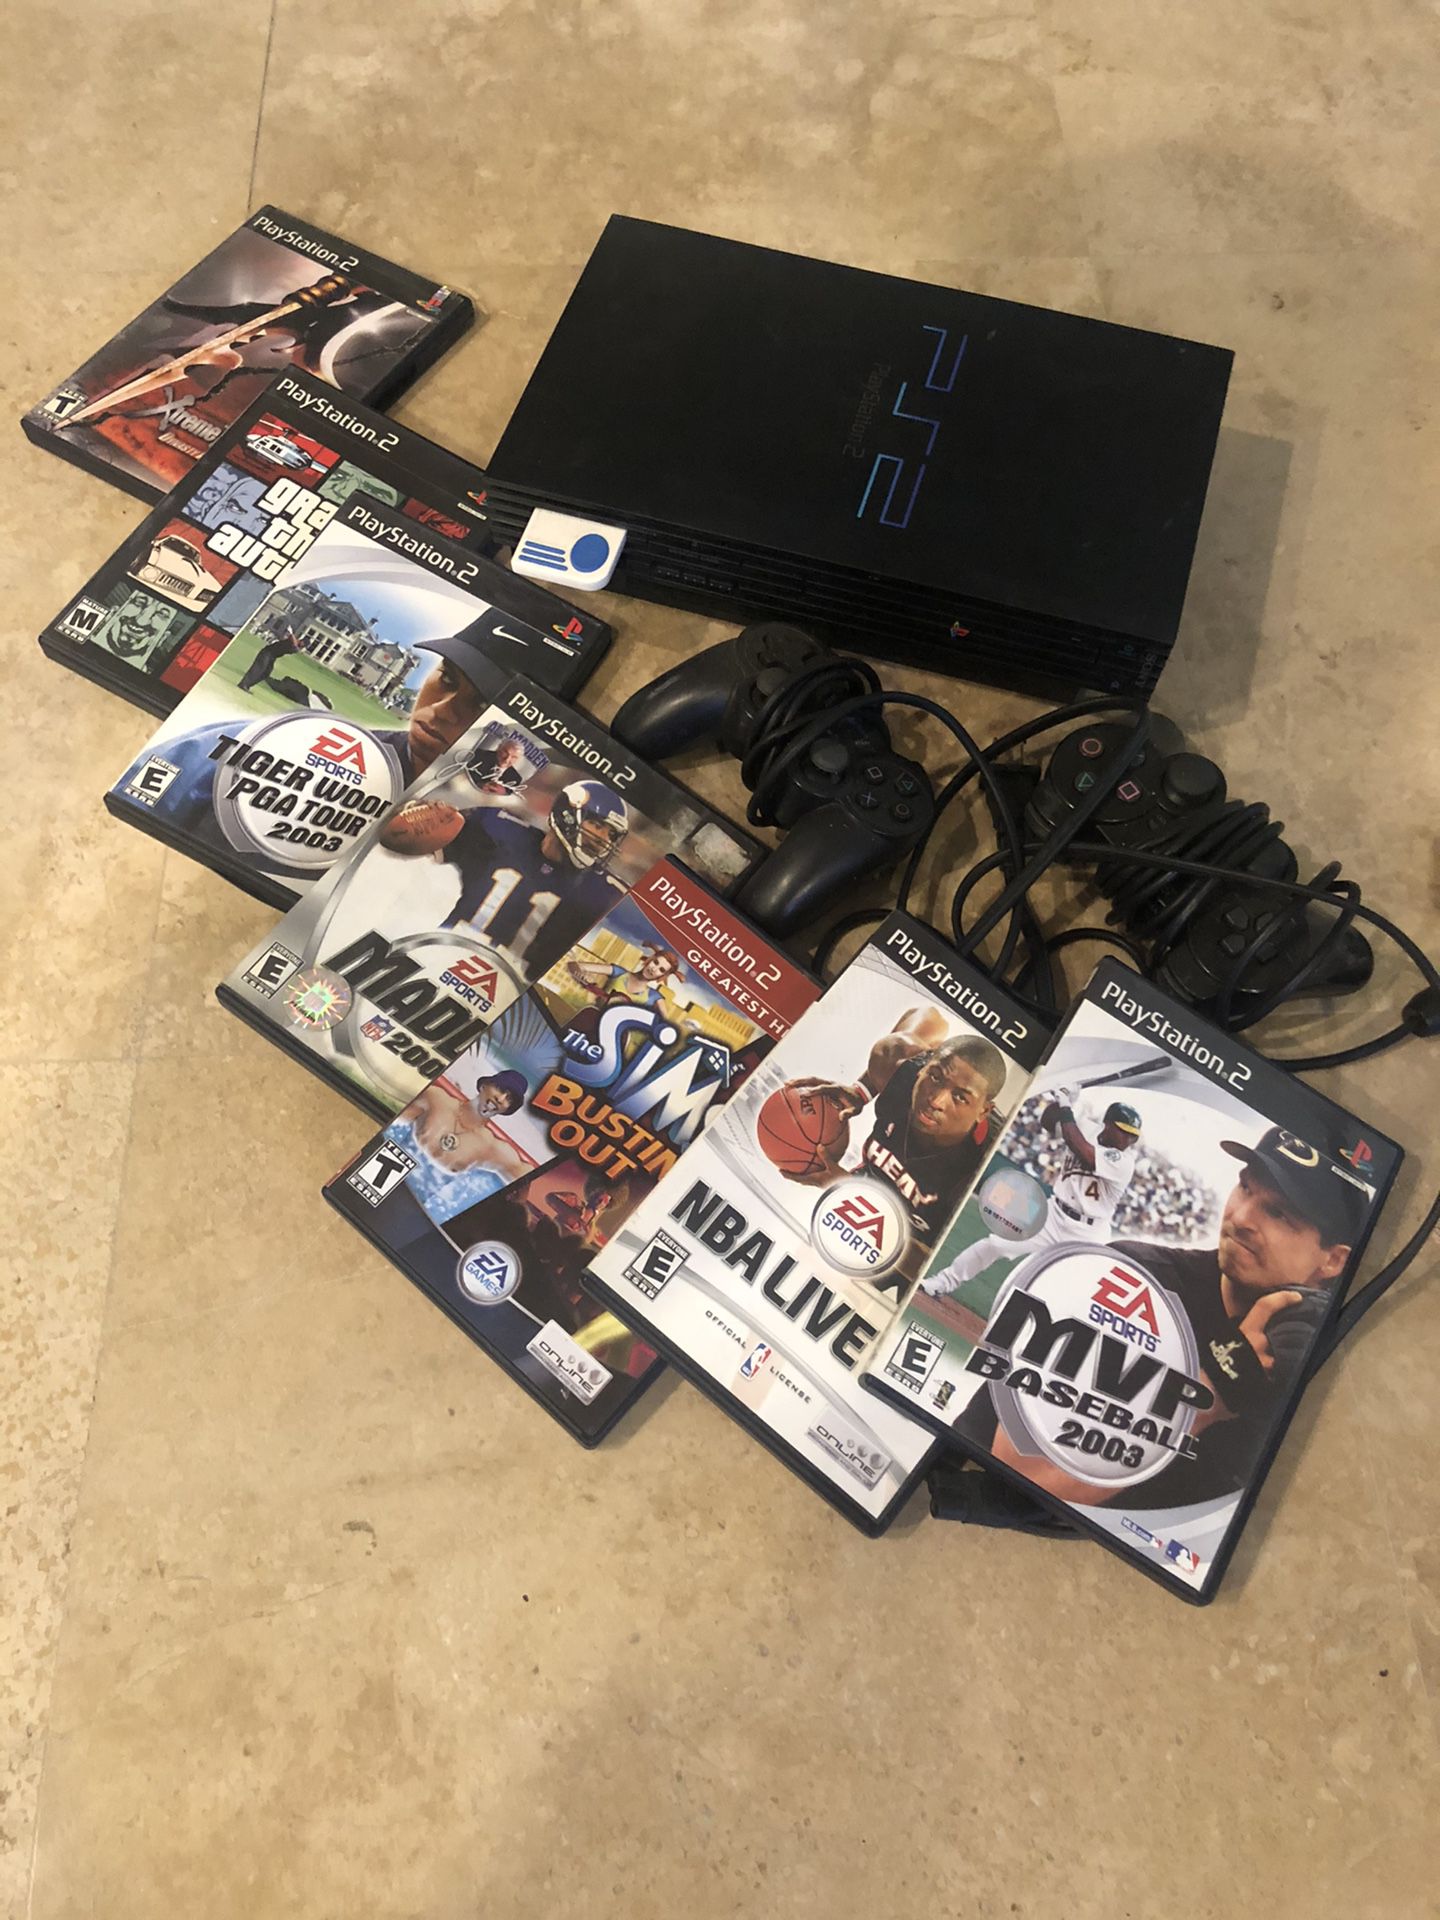 PS2 games